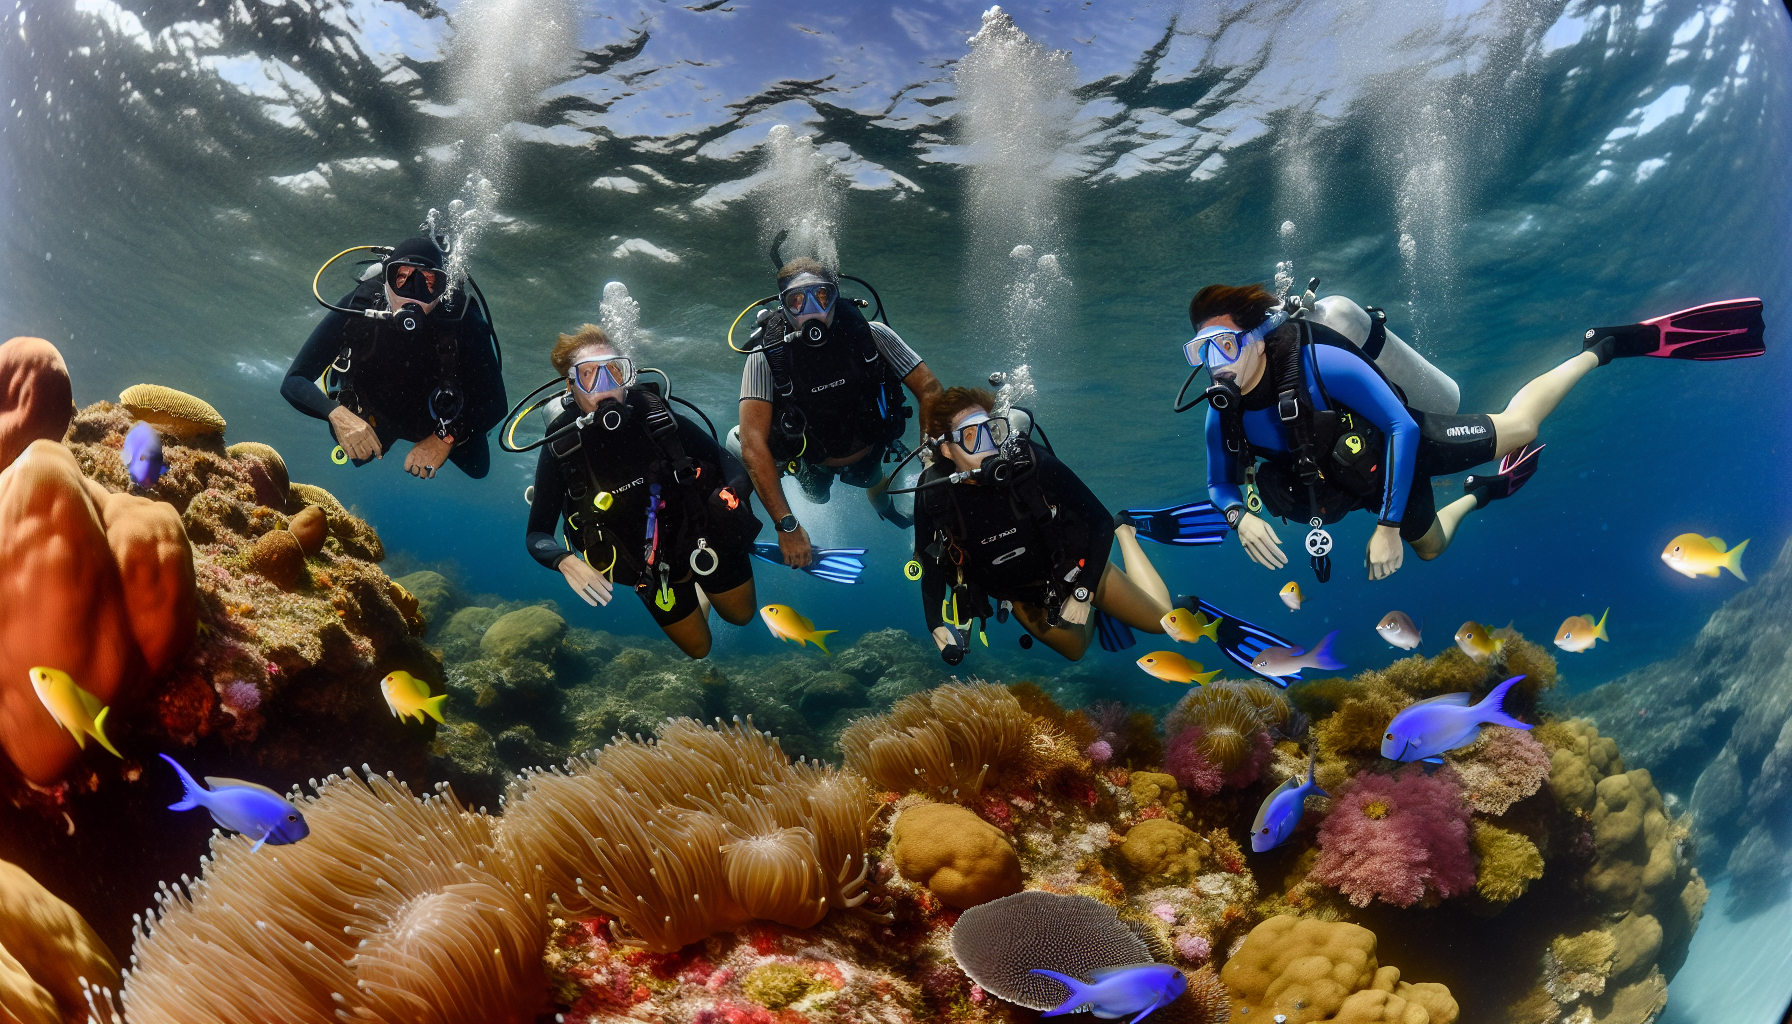 Divers exploring marine life at Catalina Island, Costa Rica